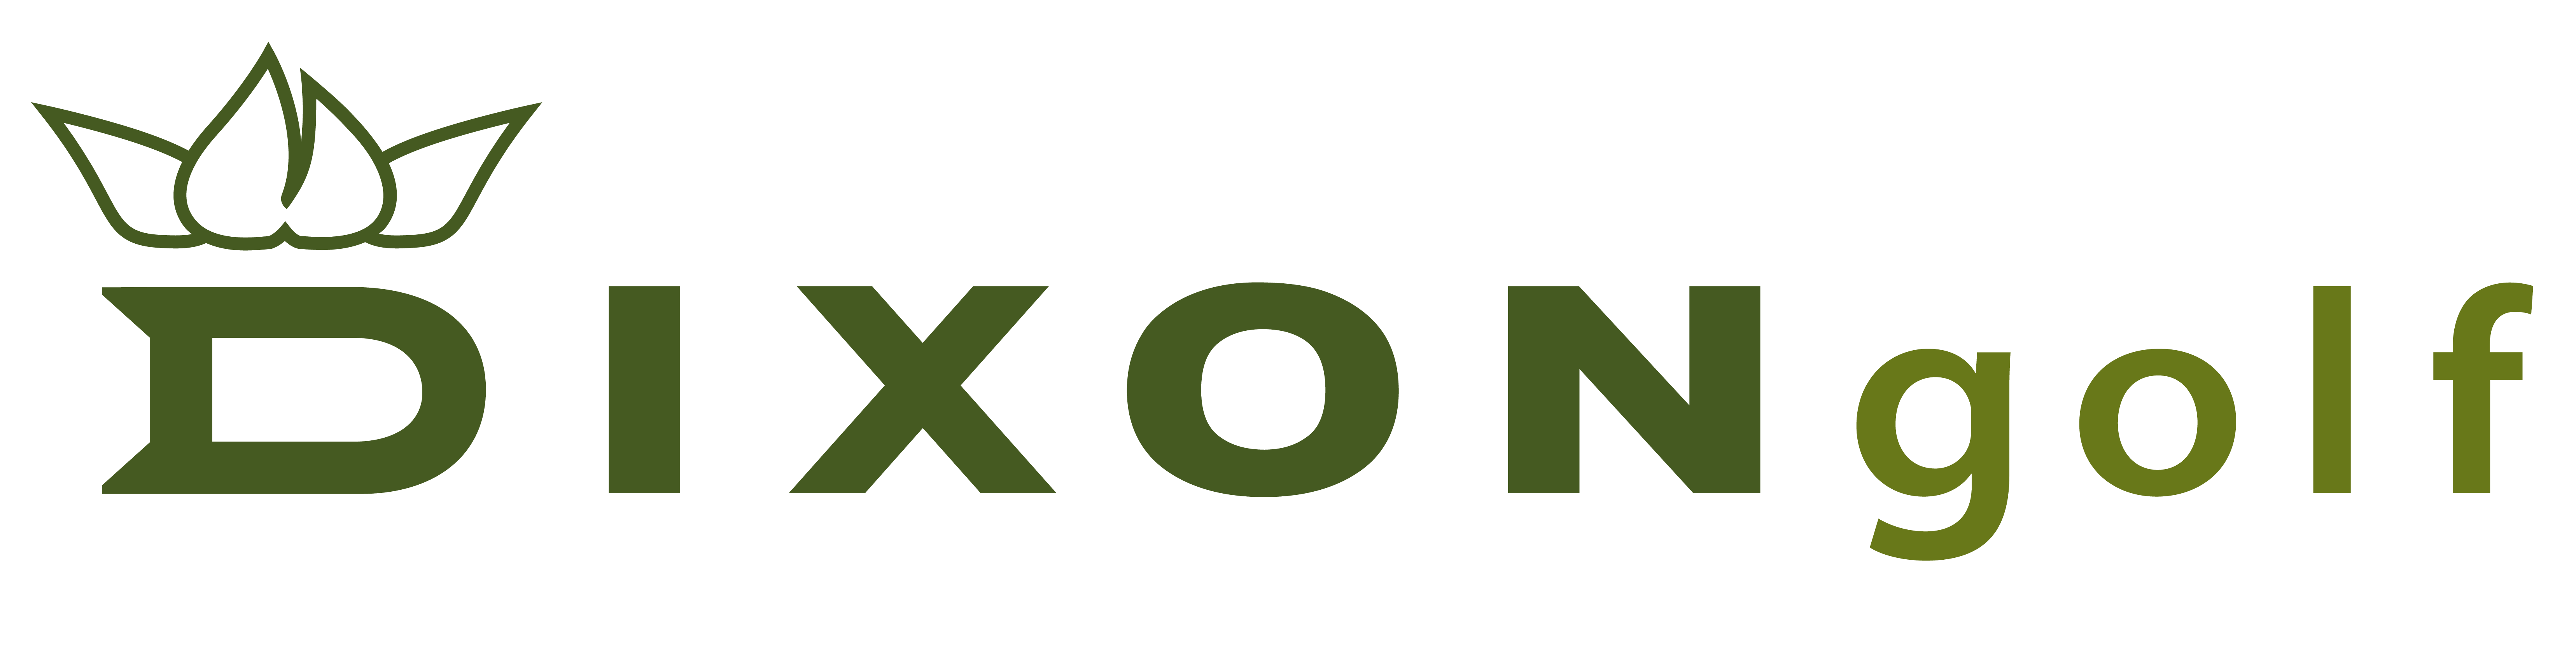 Dixon Golf Logo